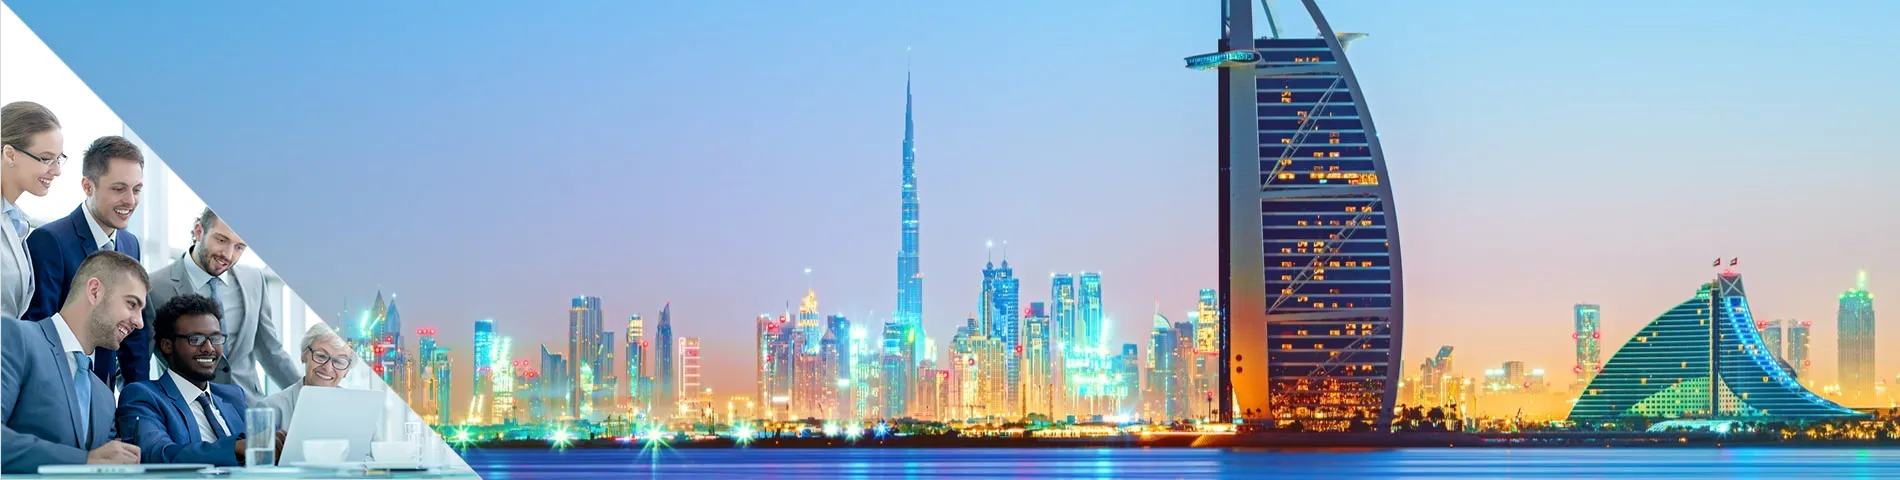 Dubai - Business Group